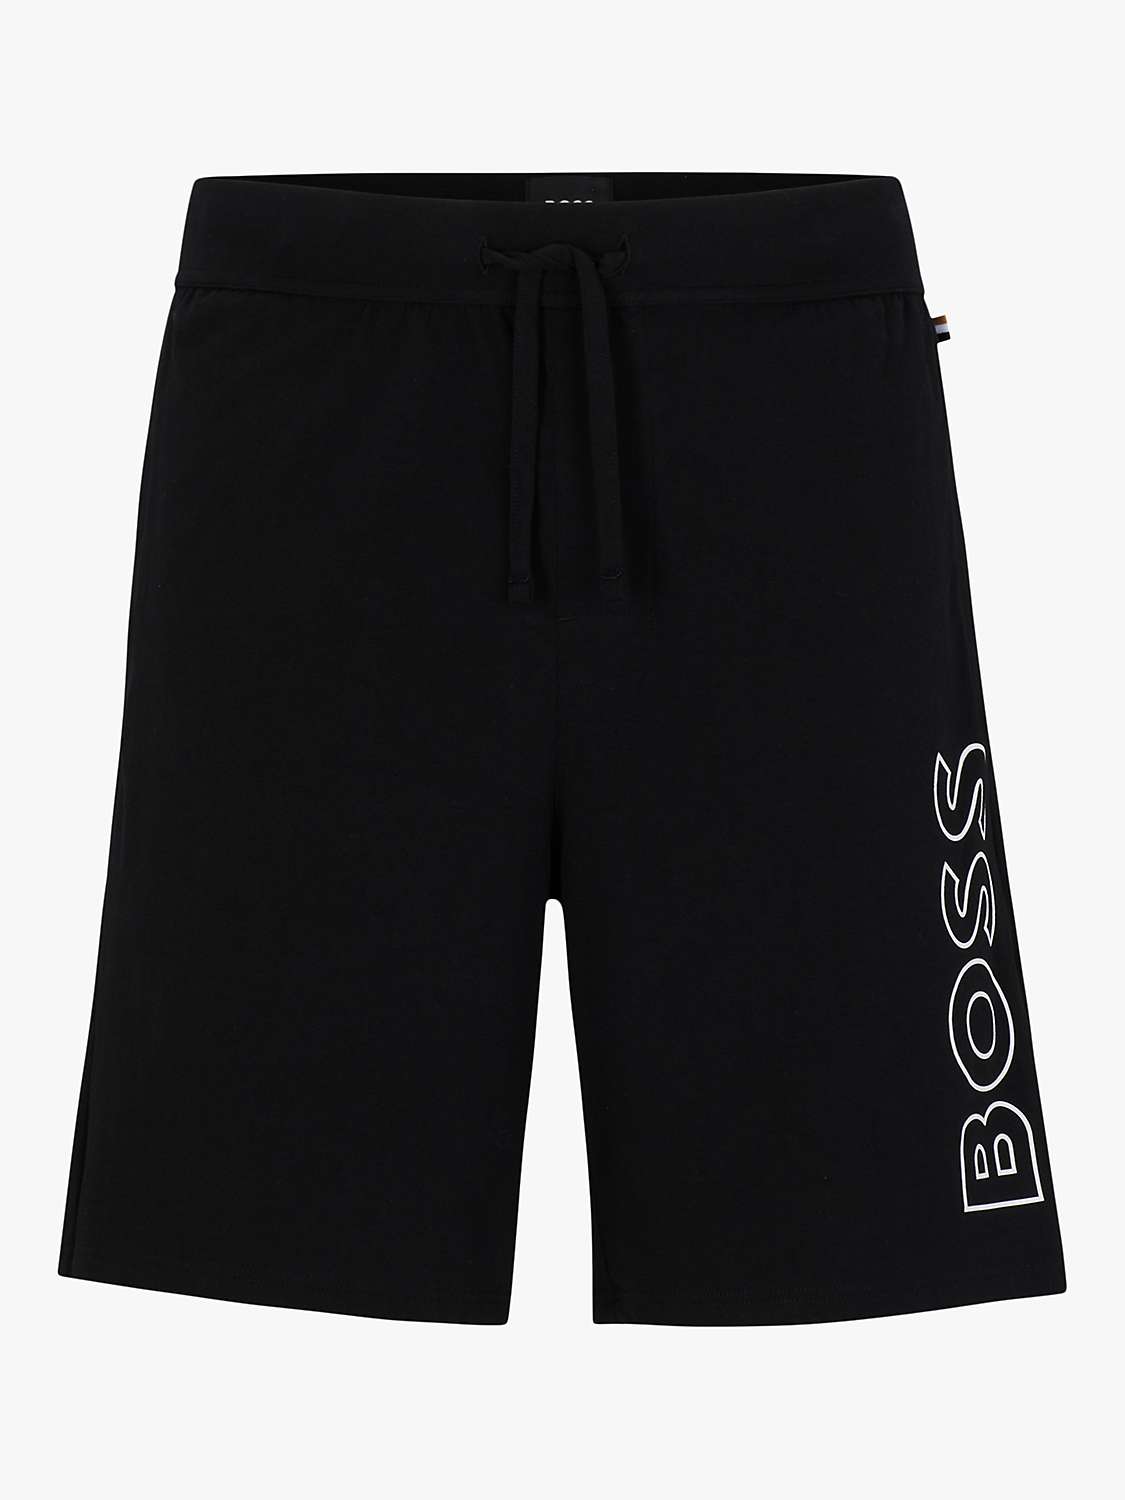 Buy HUGO BOSS BOSS Logo Pyjama Shorts, Black Online at johnlewis.com